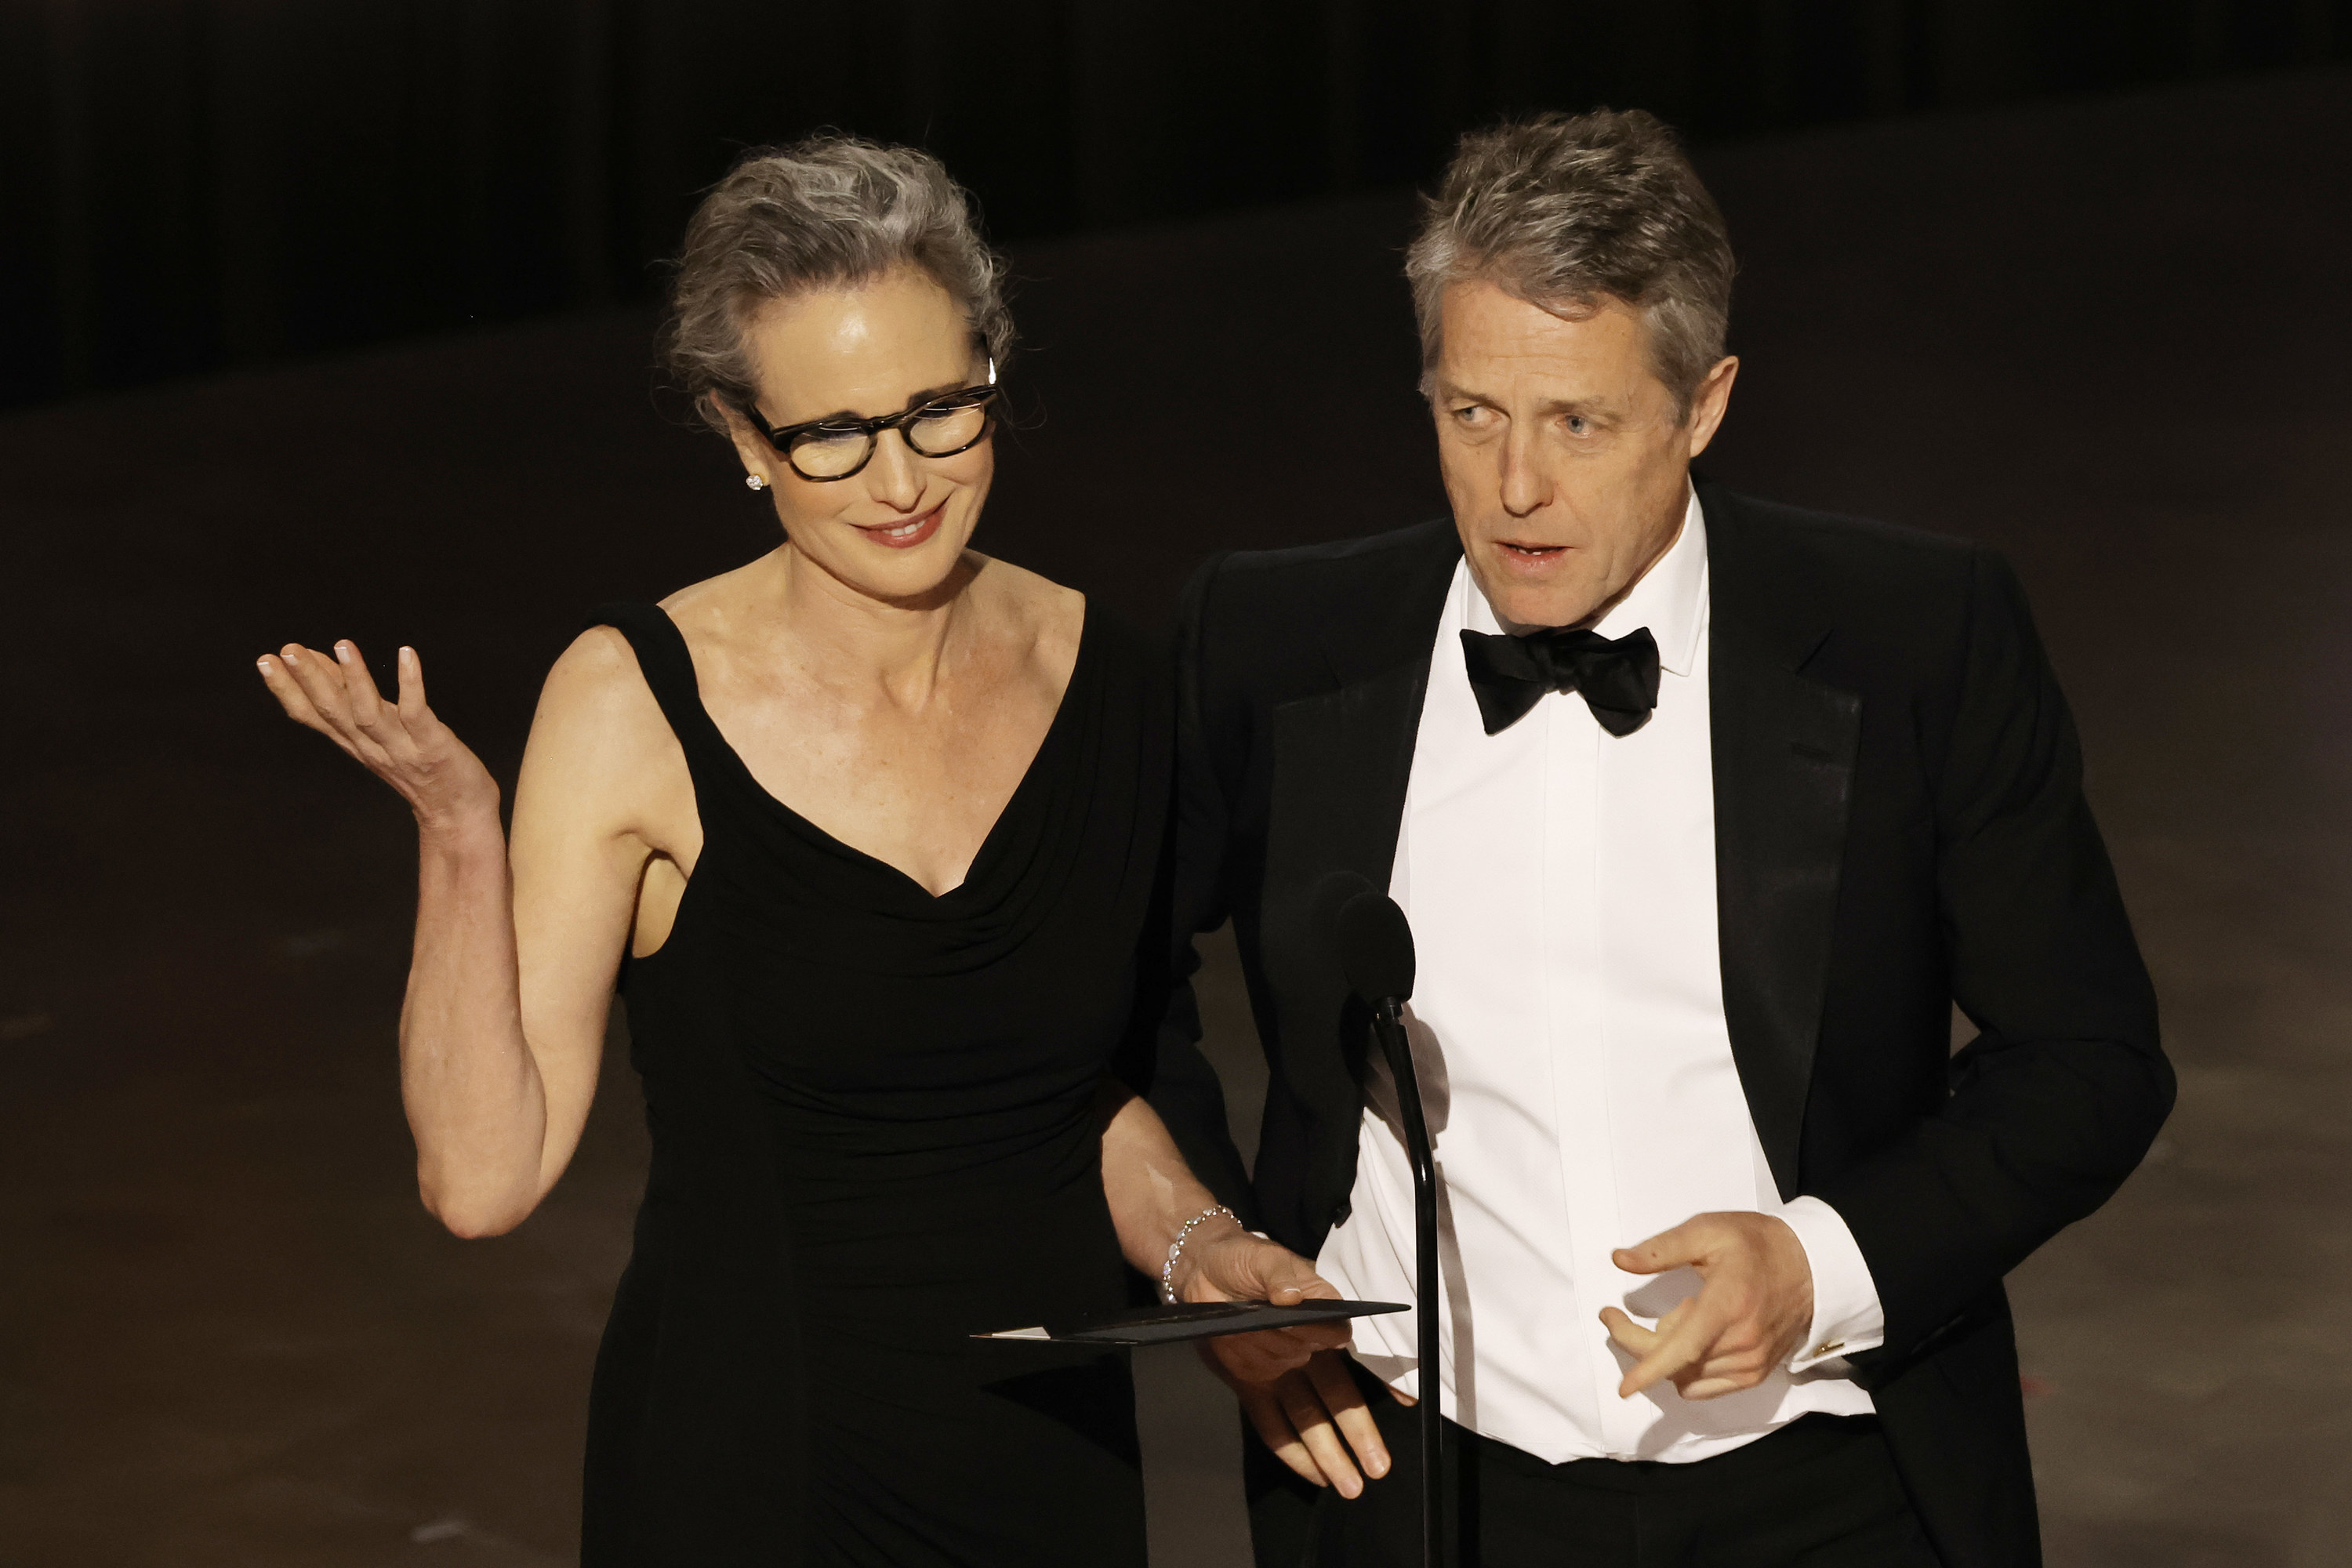 Andie and Hugh onstage presenting an award